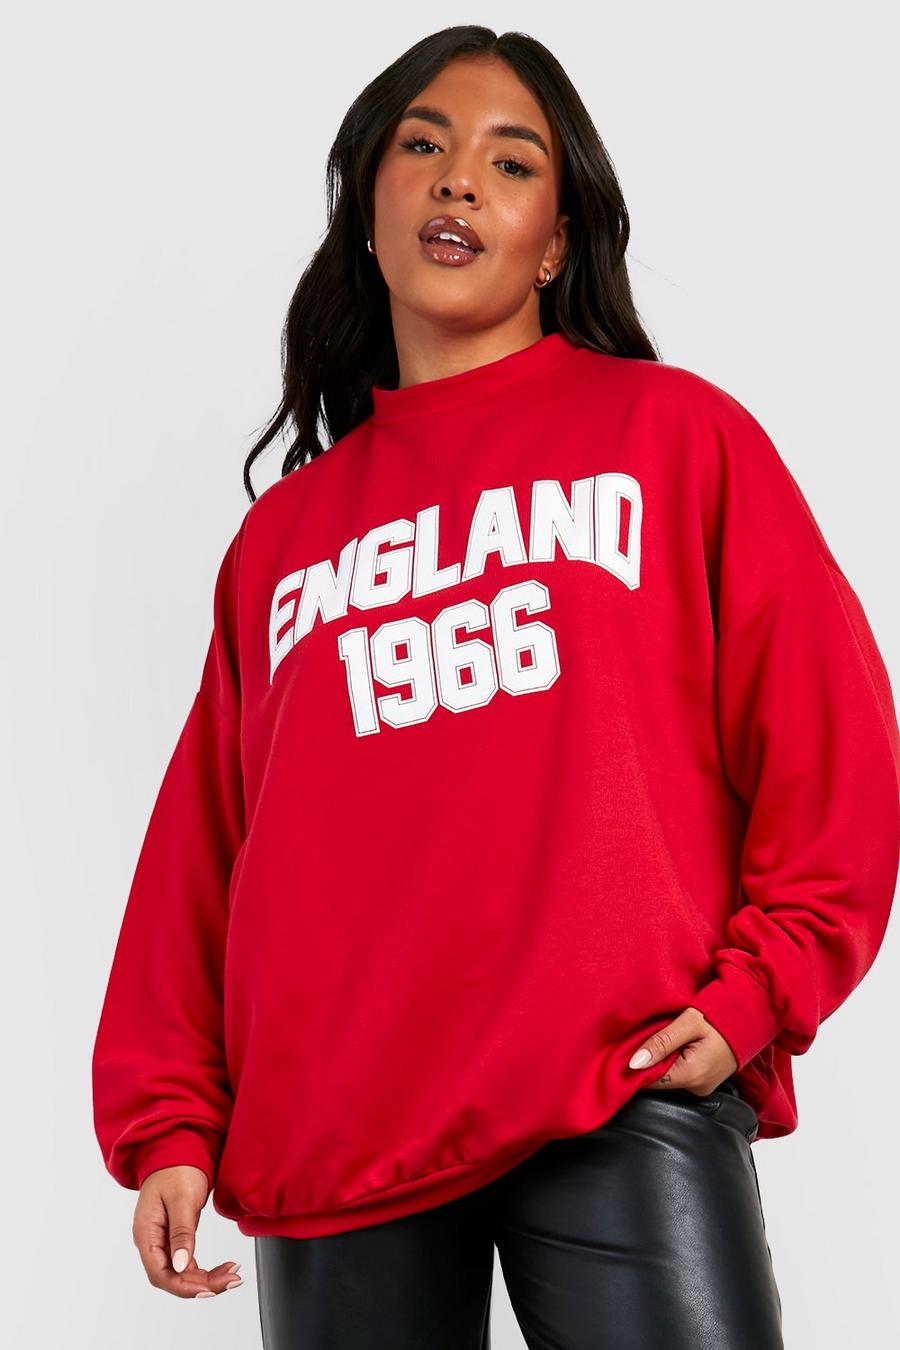 Grande taille - Sweat à slogan England 1966, Red